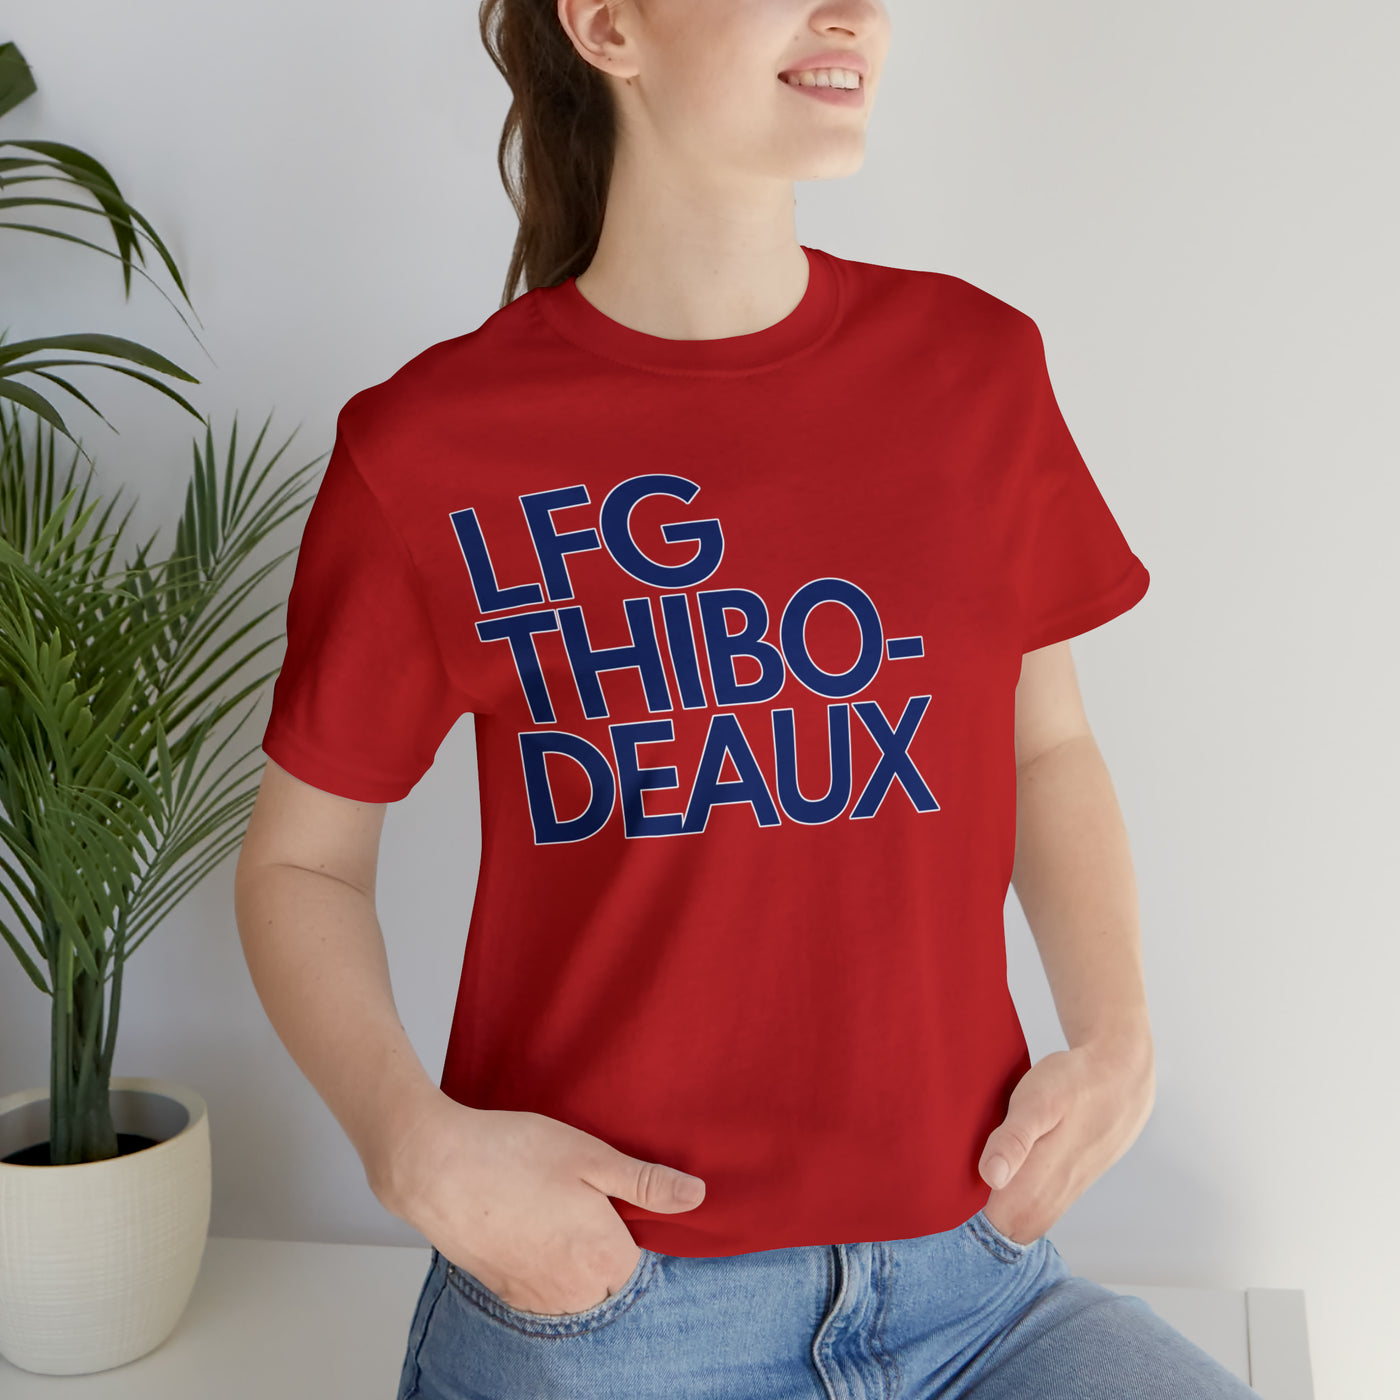 LFG Thibodeaux